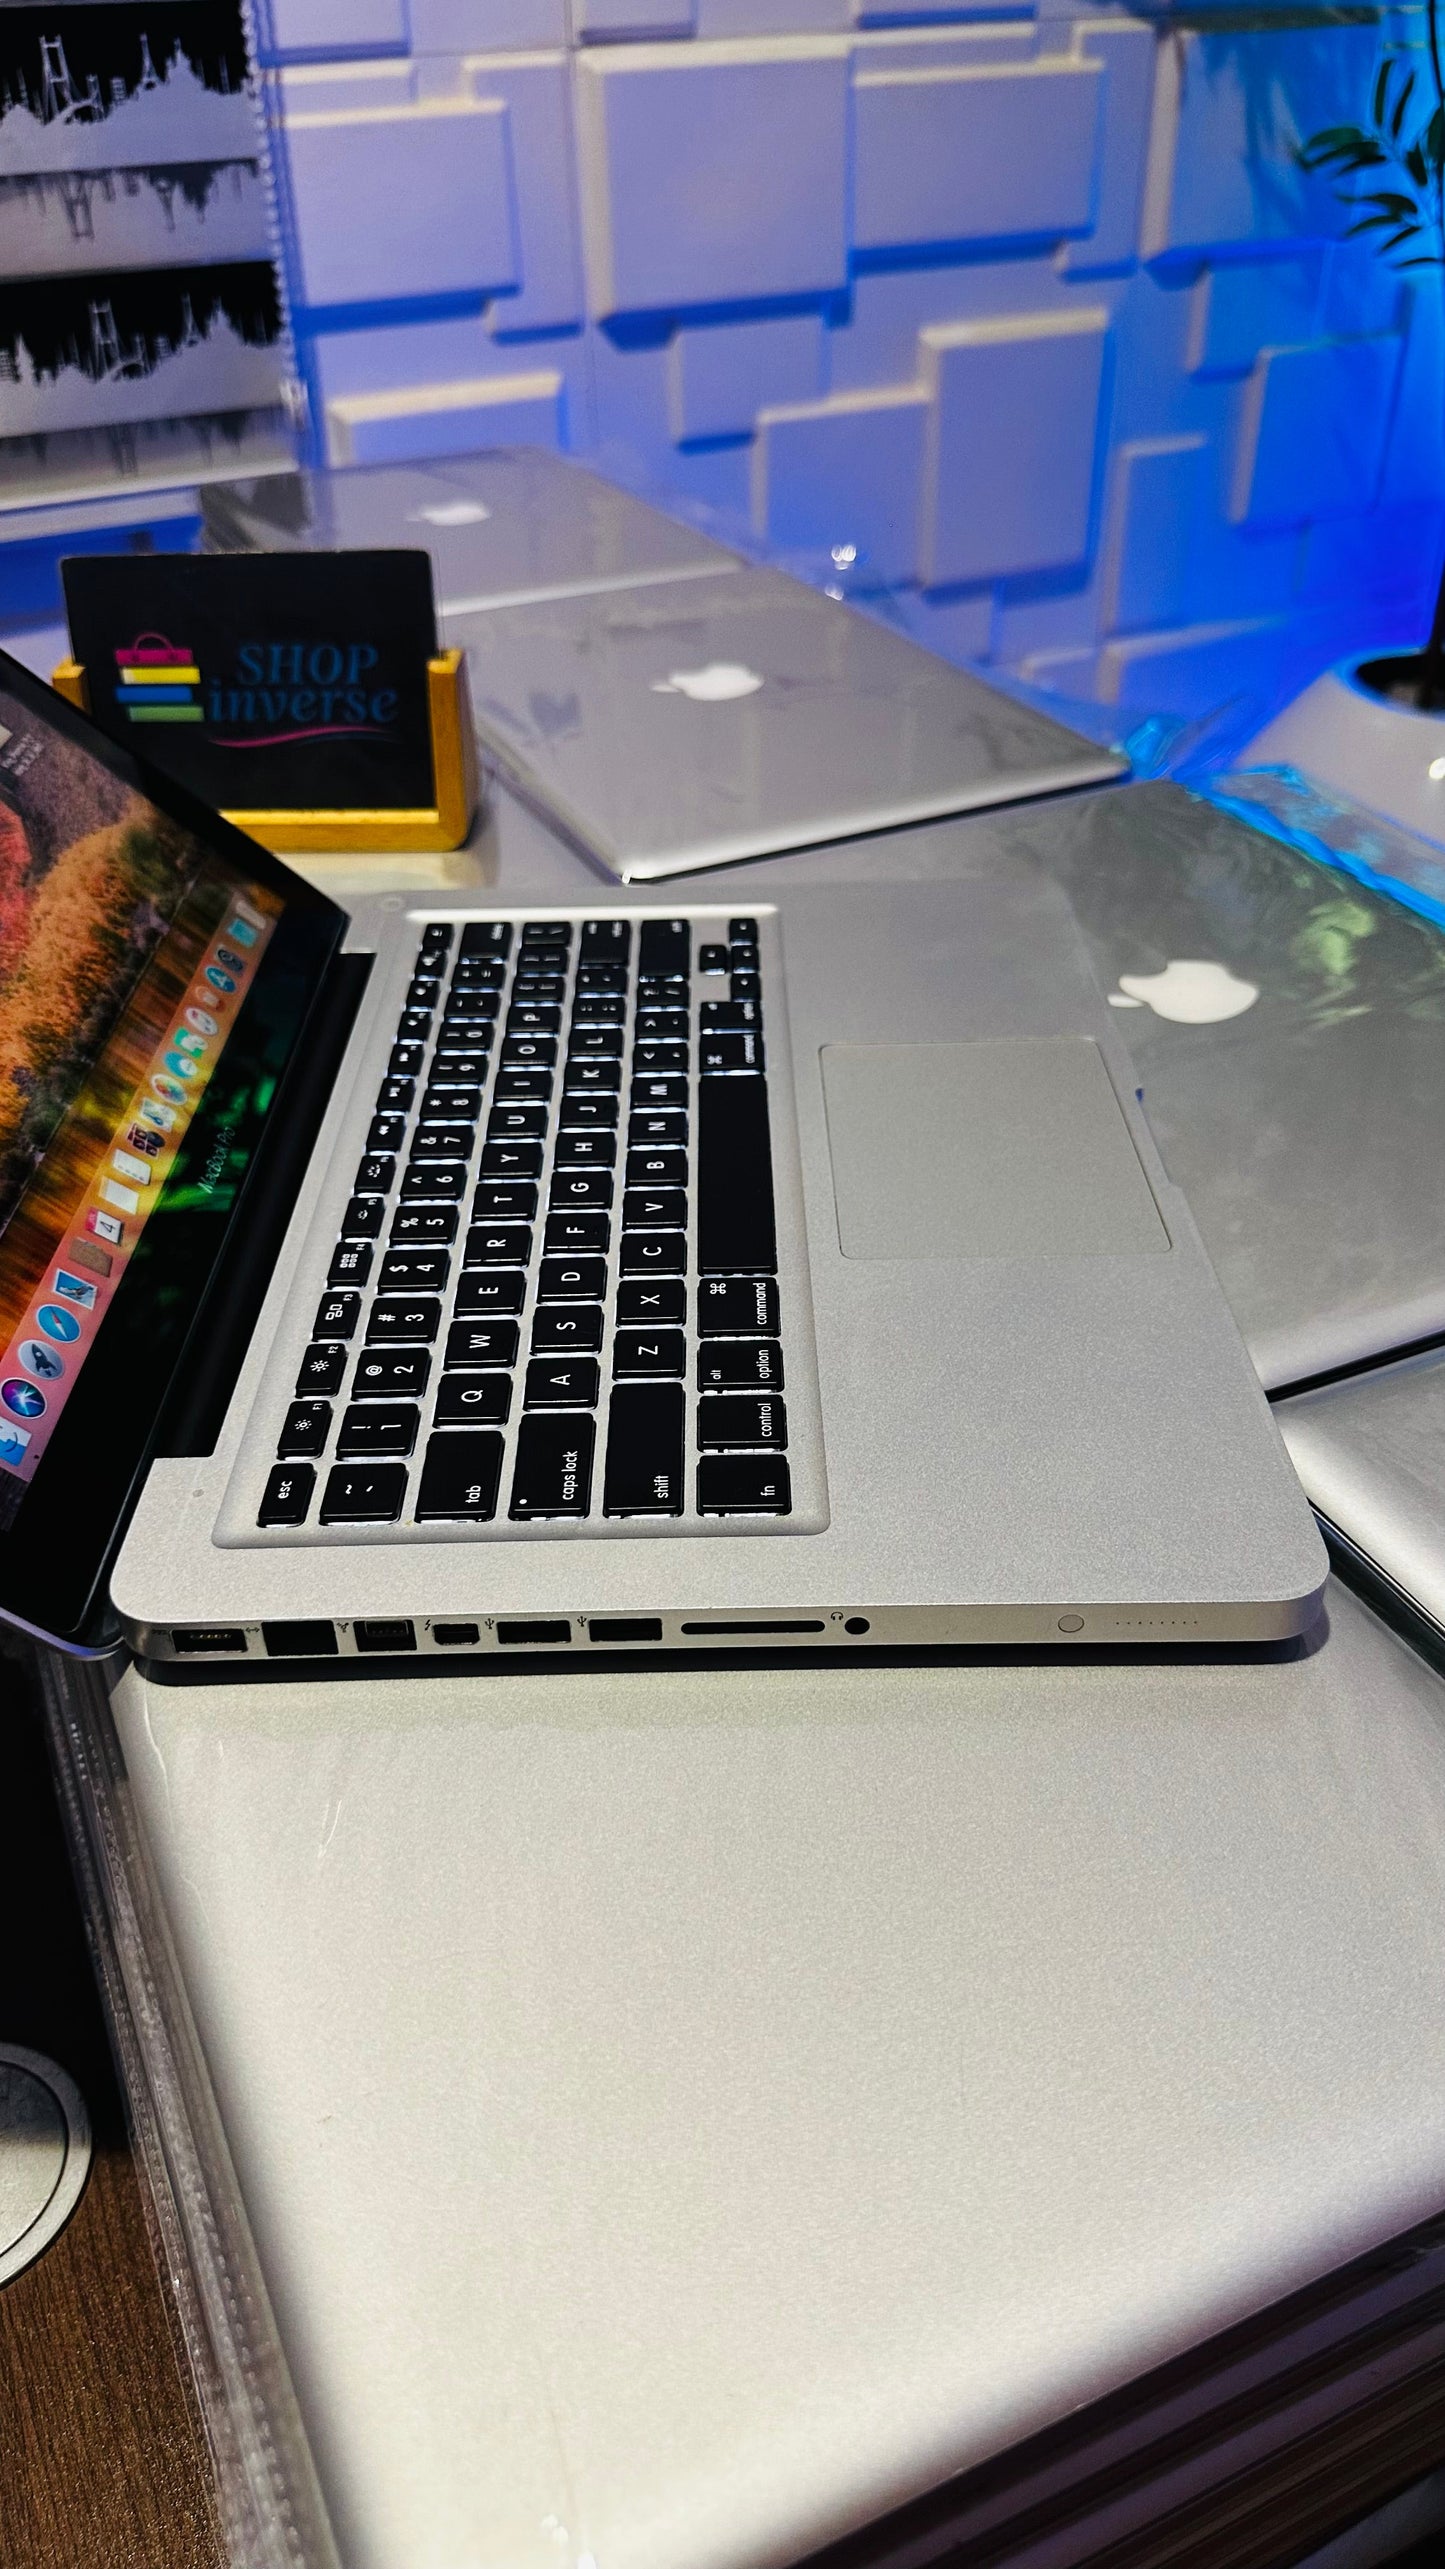 13.3 inches Apple MacBook Pro 2011 - Intel Core i5 - 500GB HDD - 4GB RAM - Keypad Light